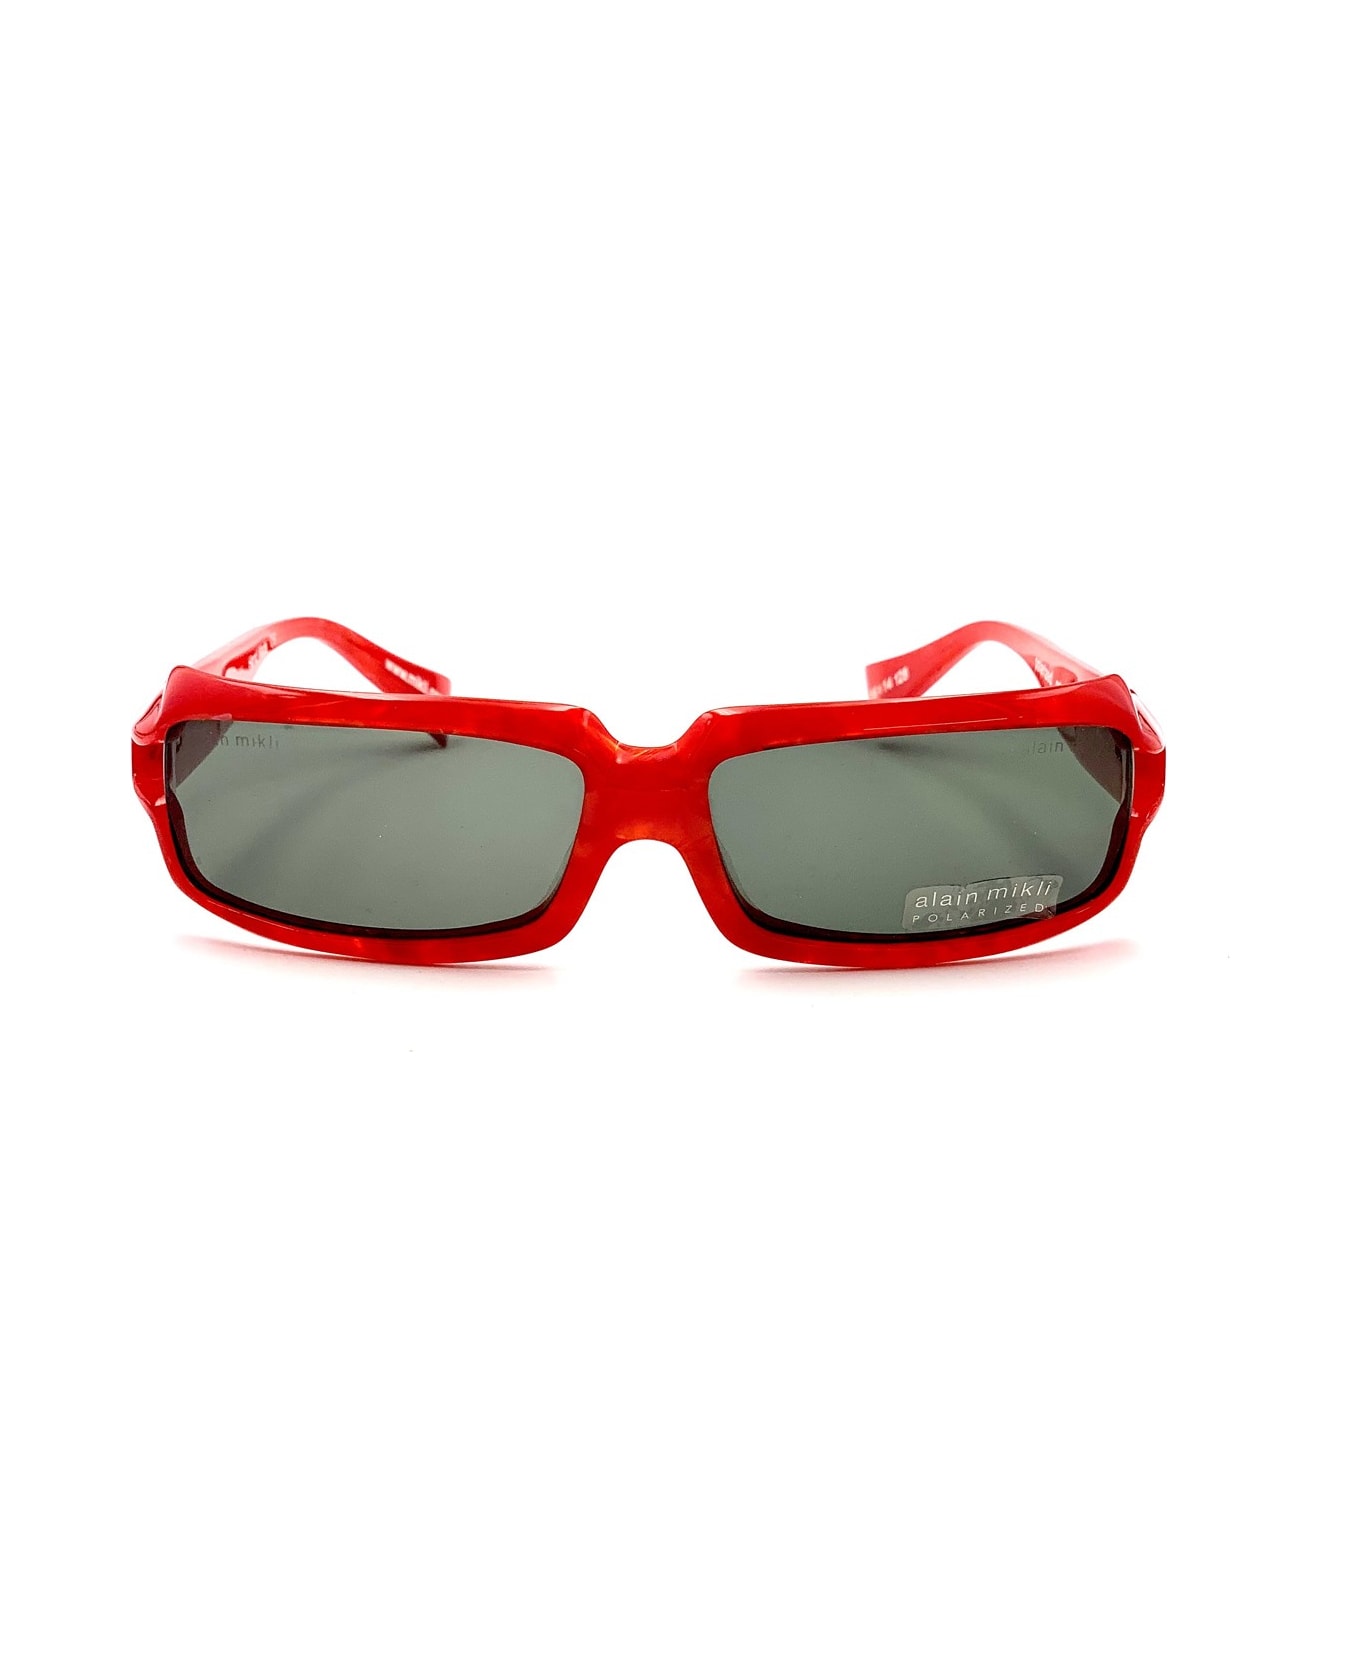 Alain Mikli A0488 Sunglasses - Rosso サングラス